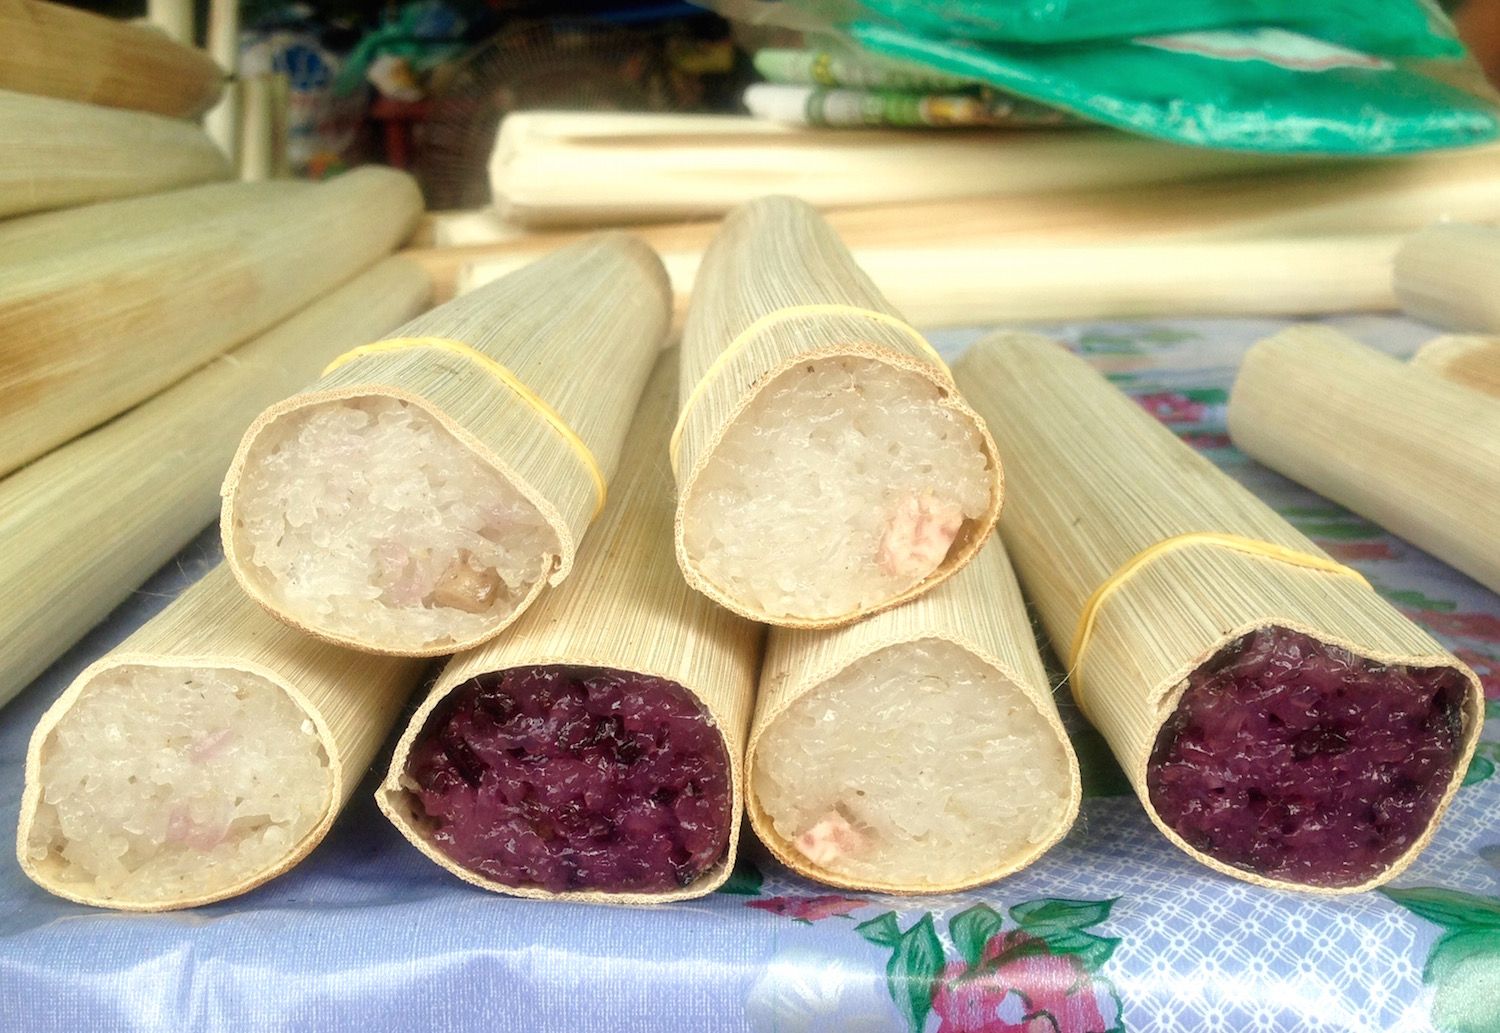 1. Khao Lam Bamboo Sticky Rice